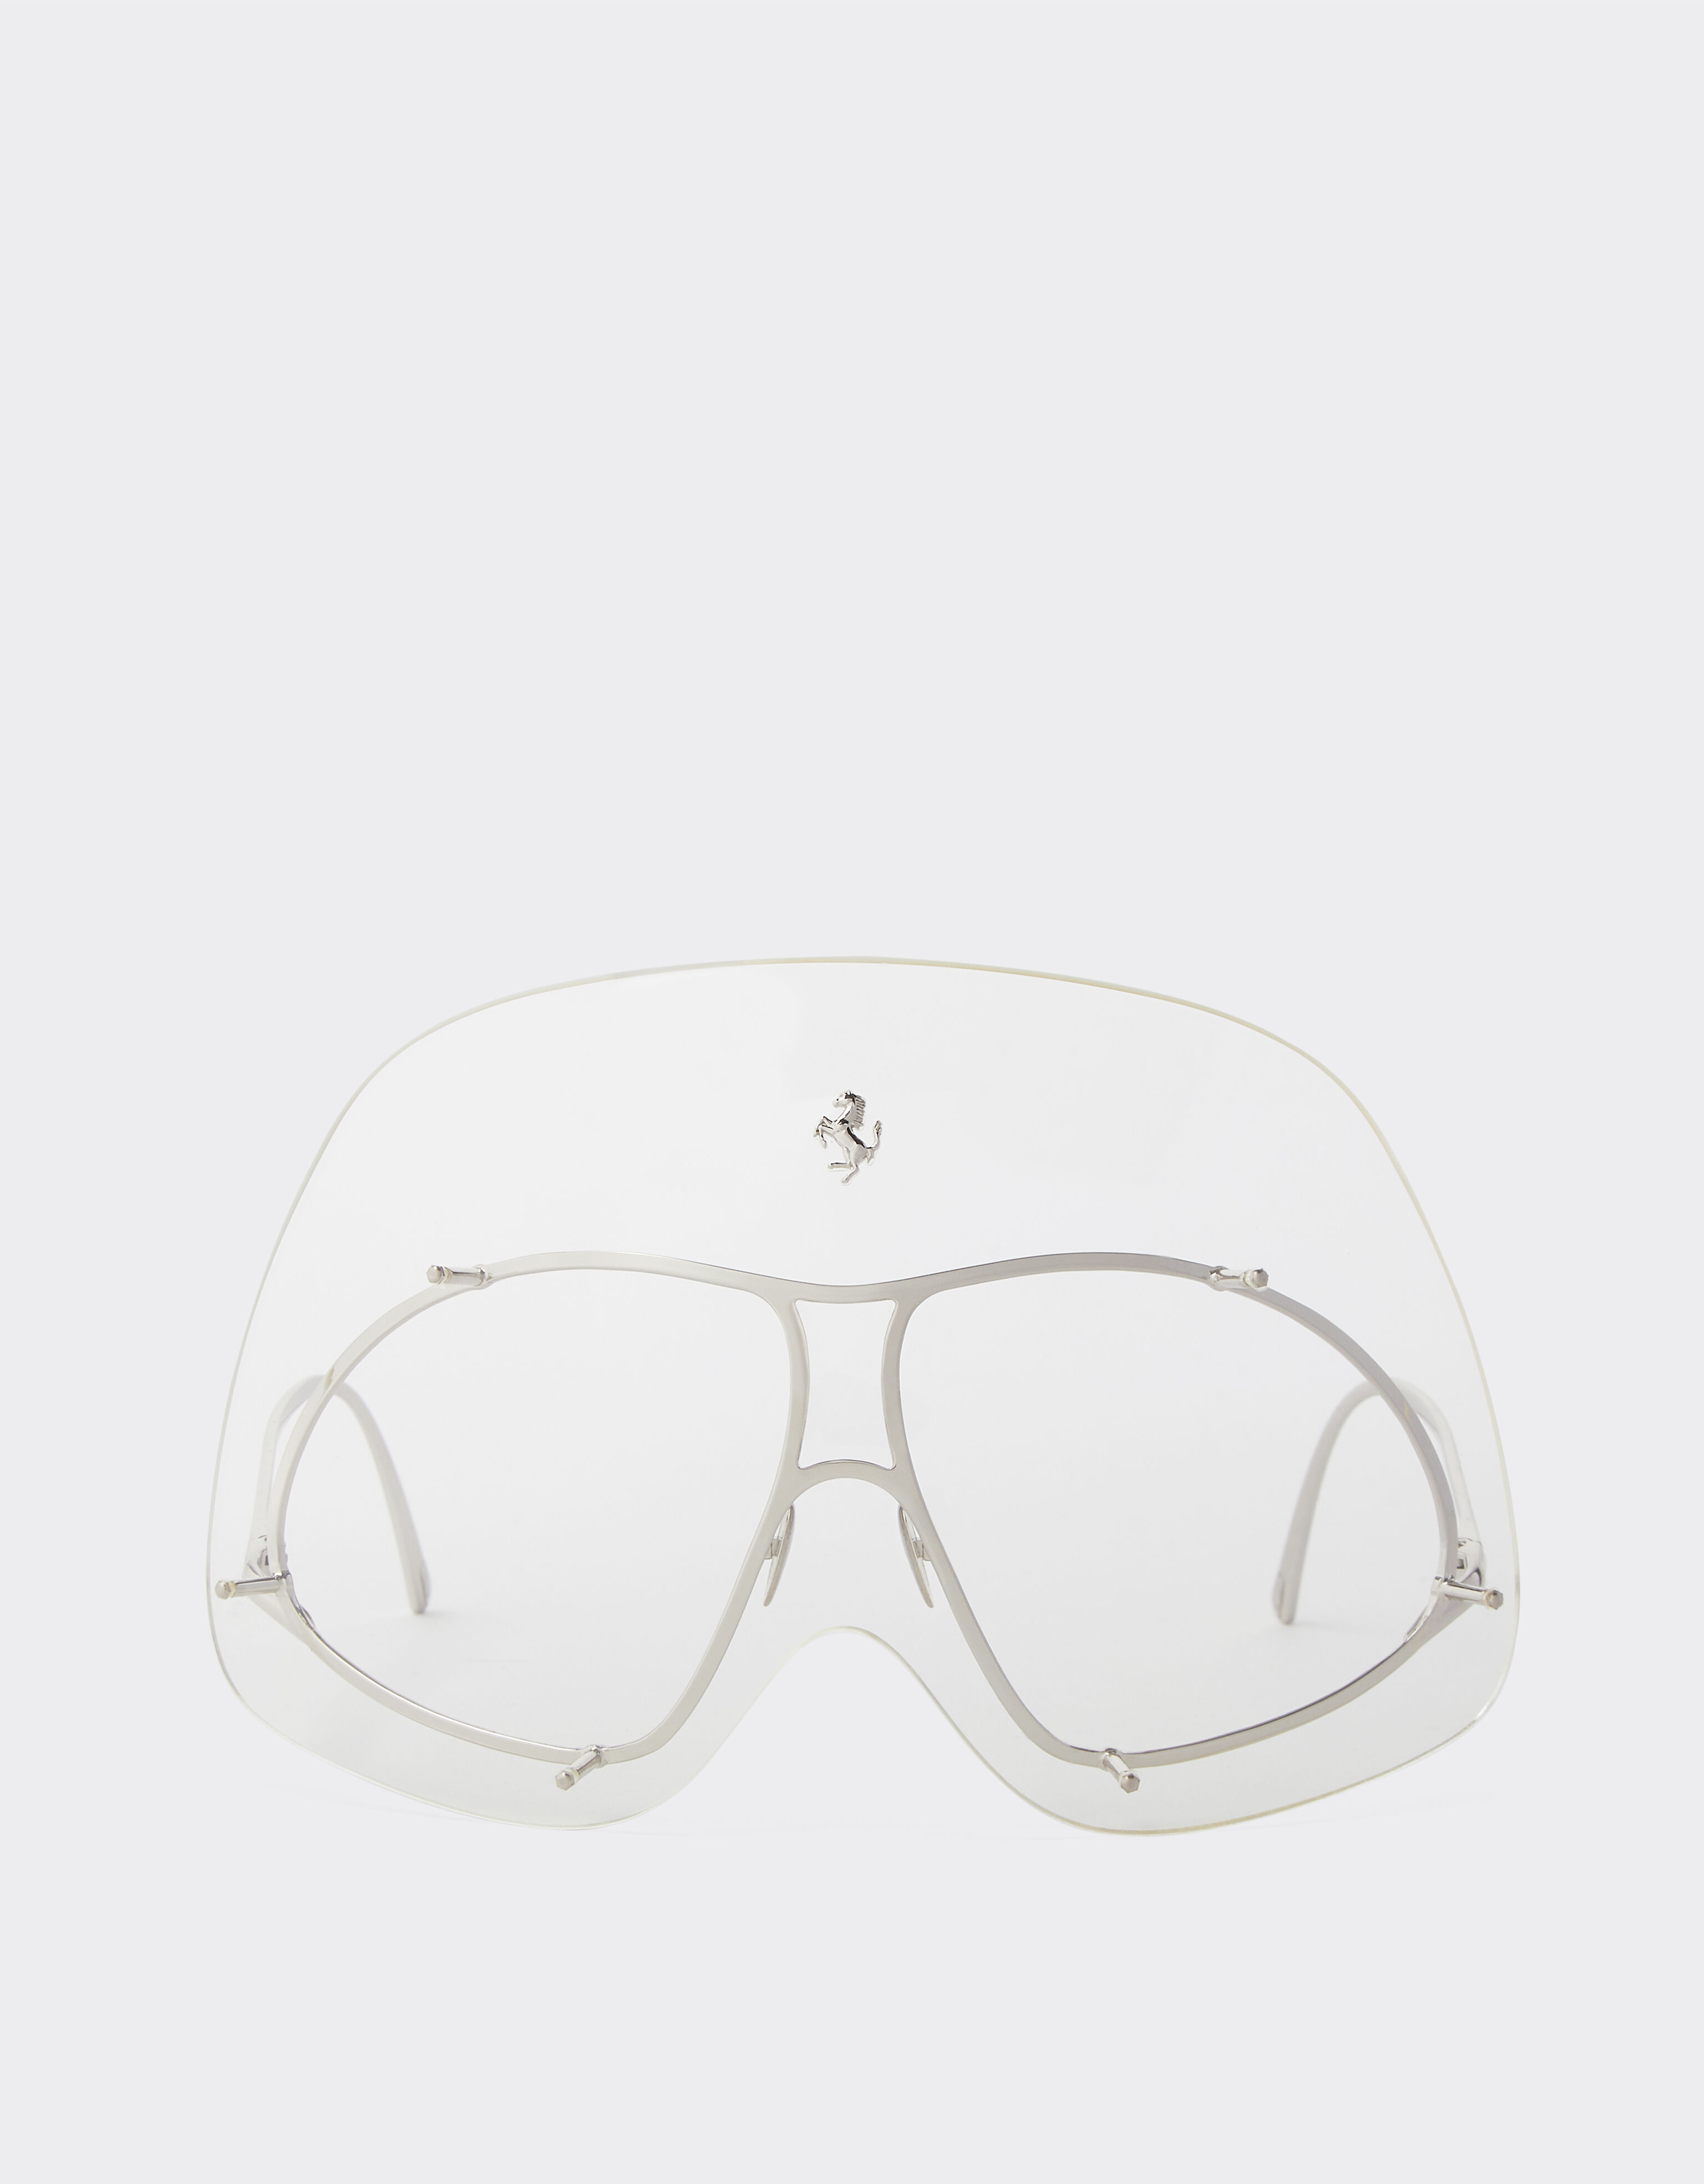 Ferrari Ferrari Limited Edition metal sunglasses with transparent shield Optical White F1258f